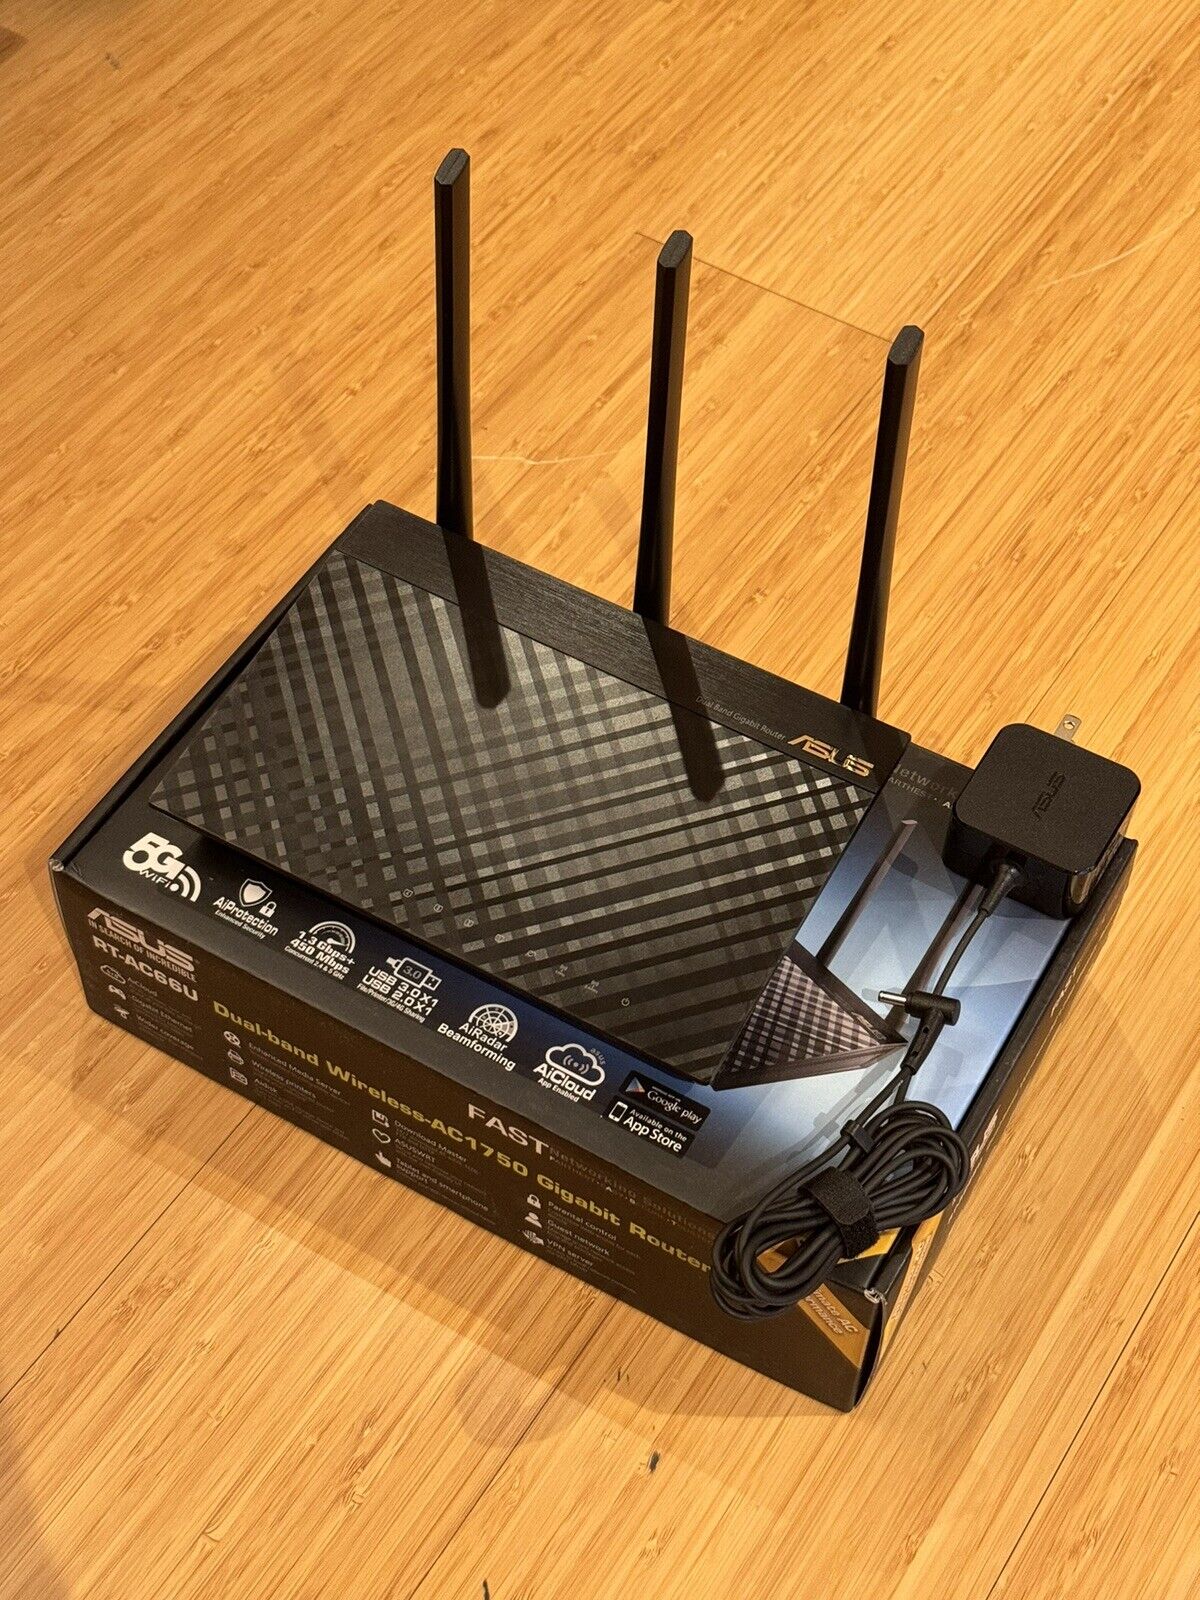 ASUS RT-AC66U B1 Dual-Band WiFi Gigabit Router